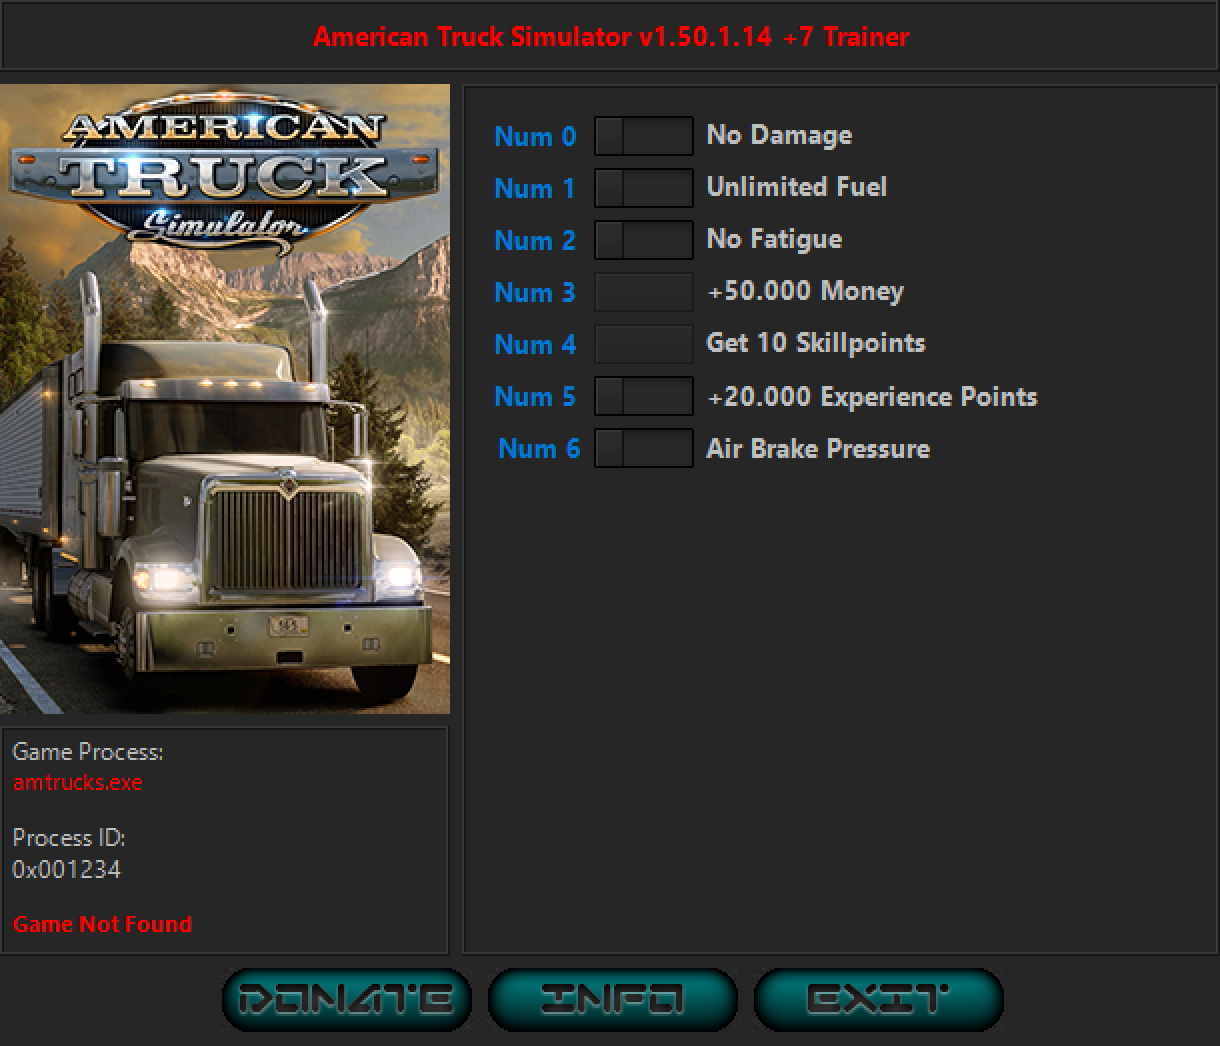 American Truck Simulator v1.50.1.14 Trainer +7